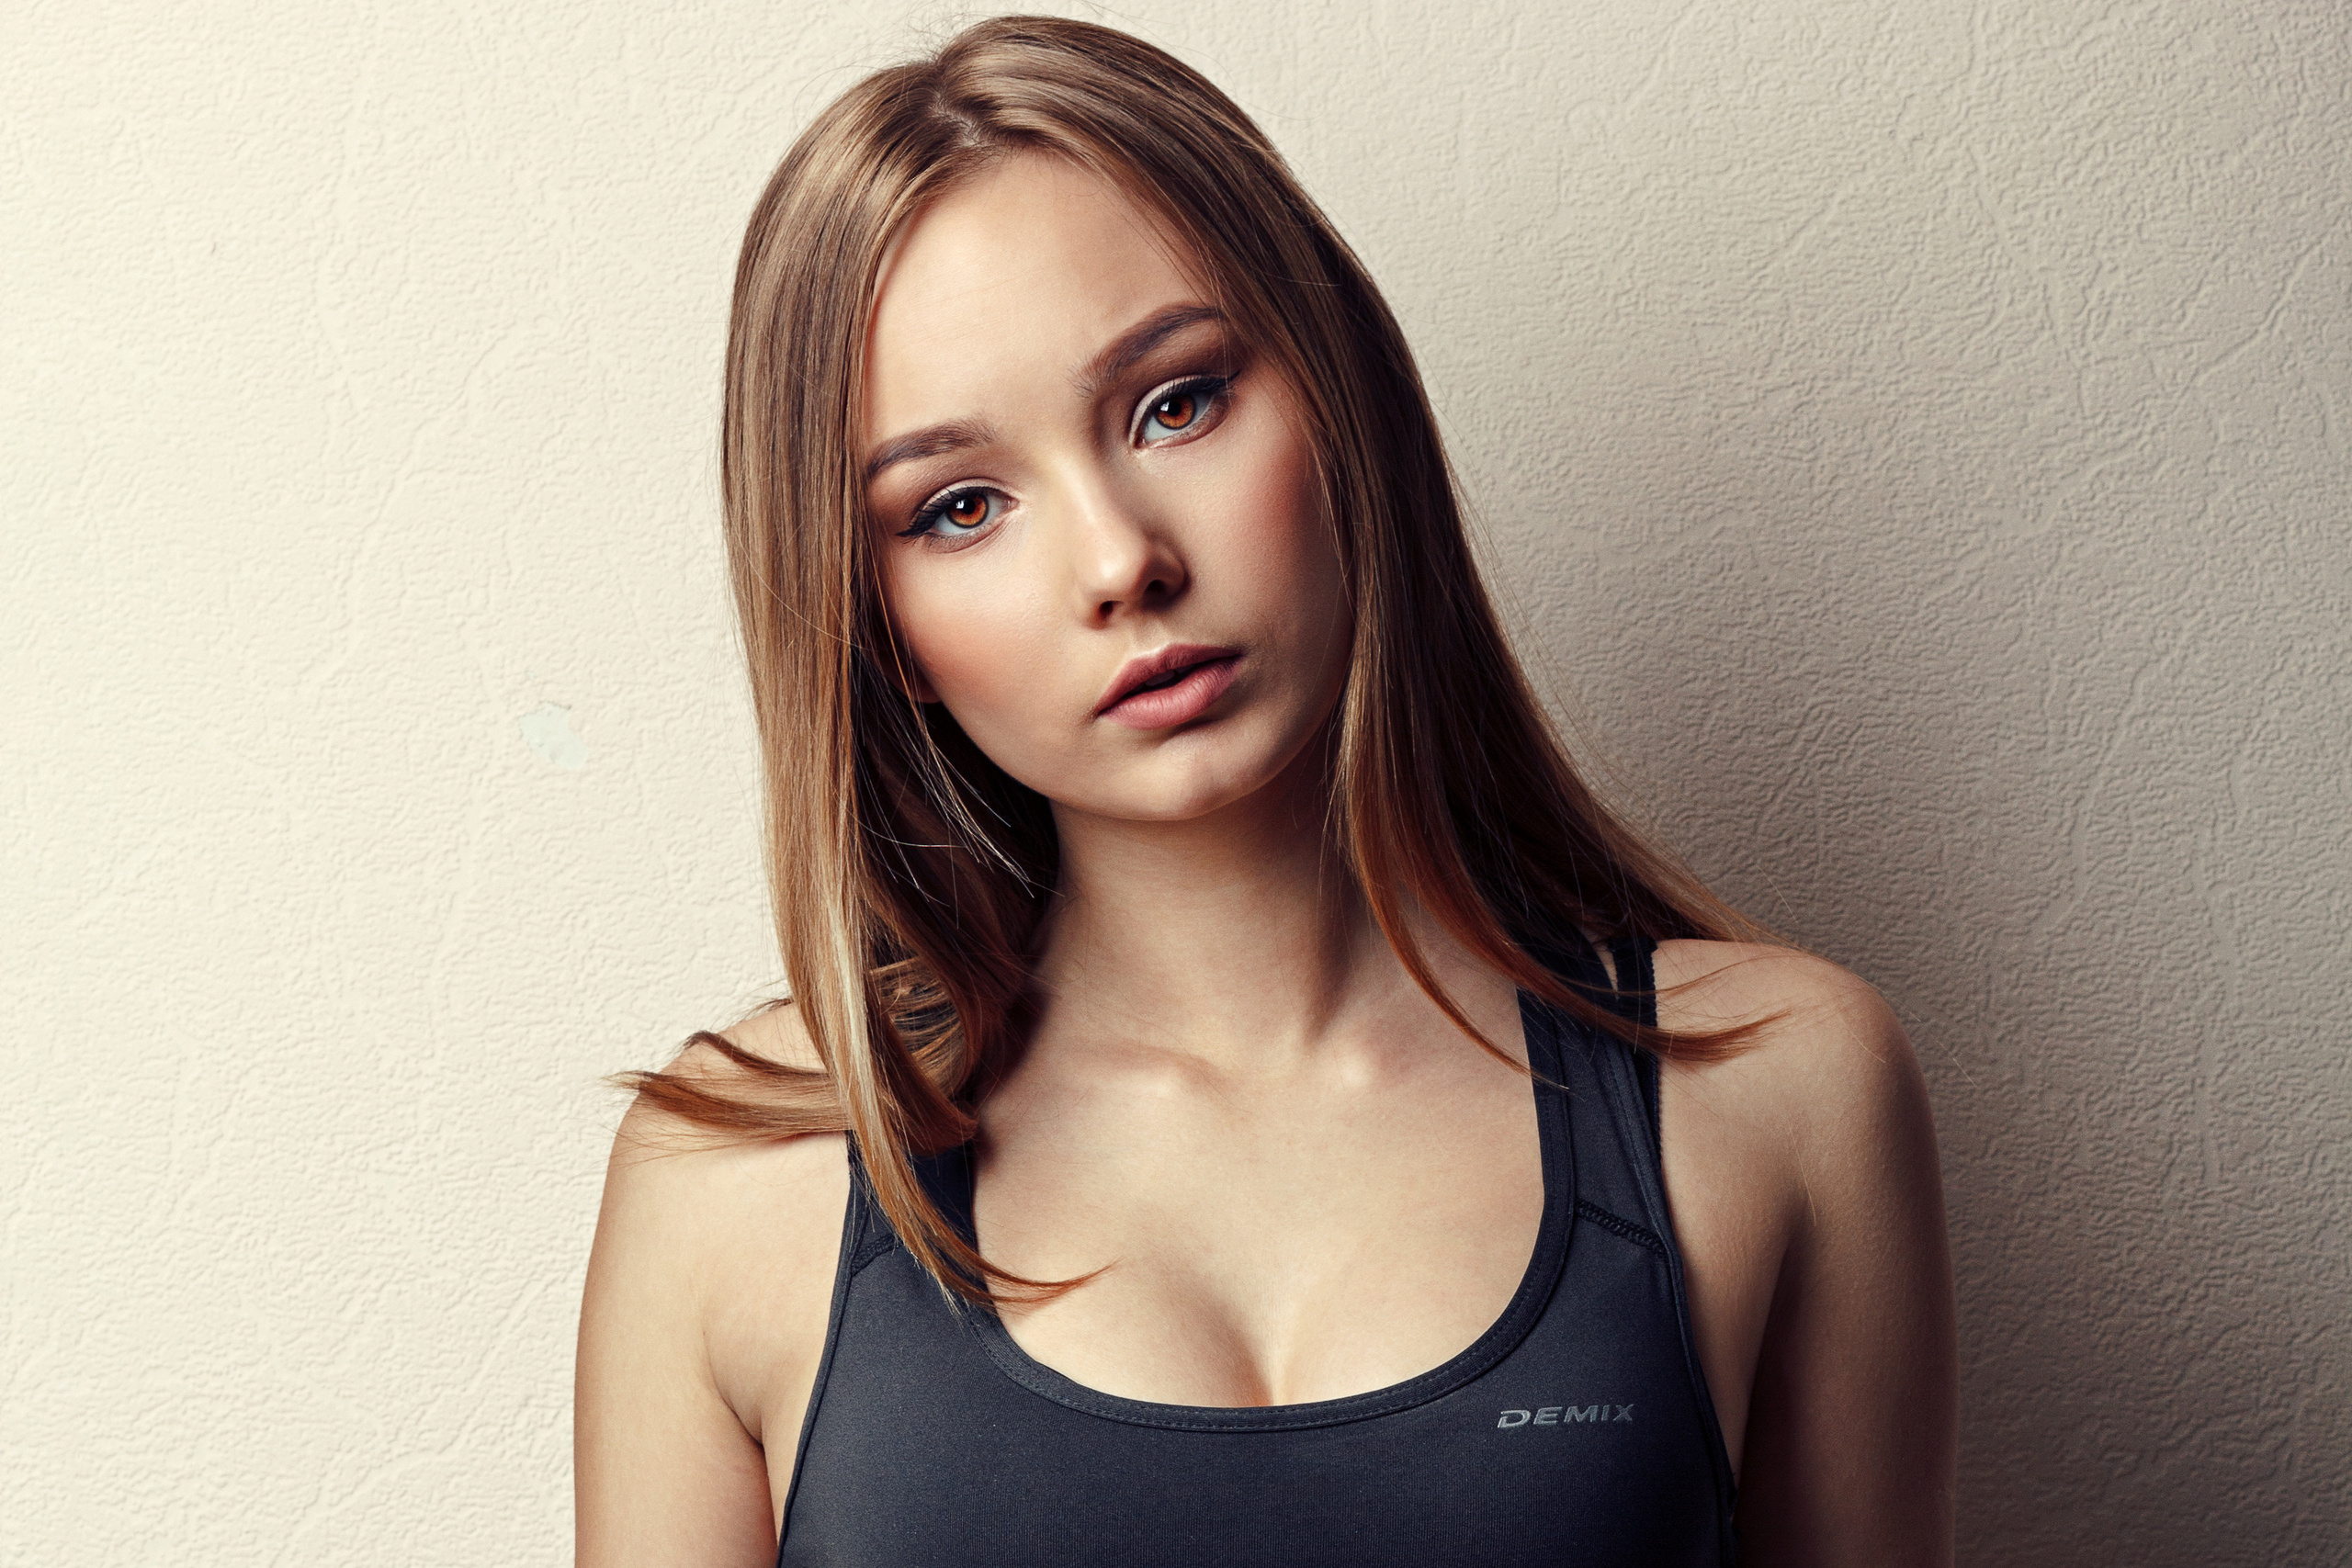 Milena Brunette Women Model Tanned Makeup Tank Top Portrait Looking At Viewer 2560x1707